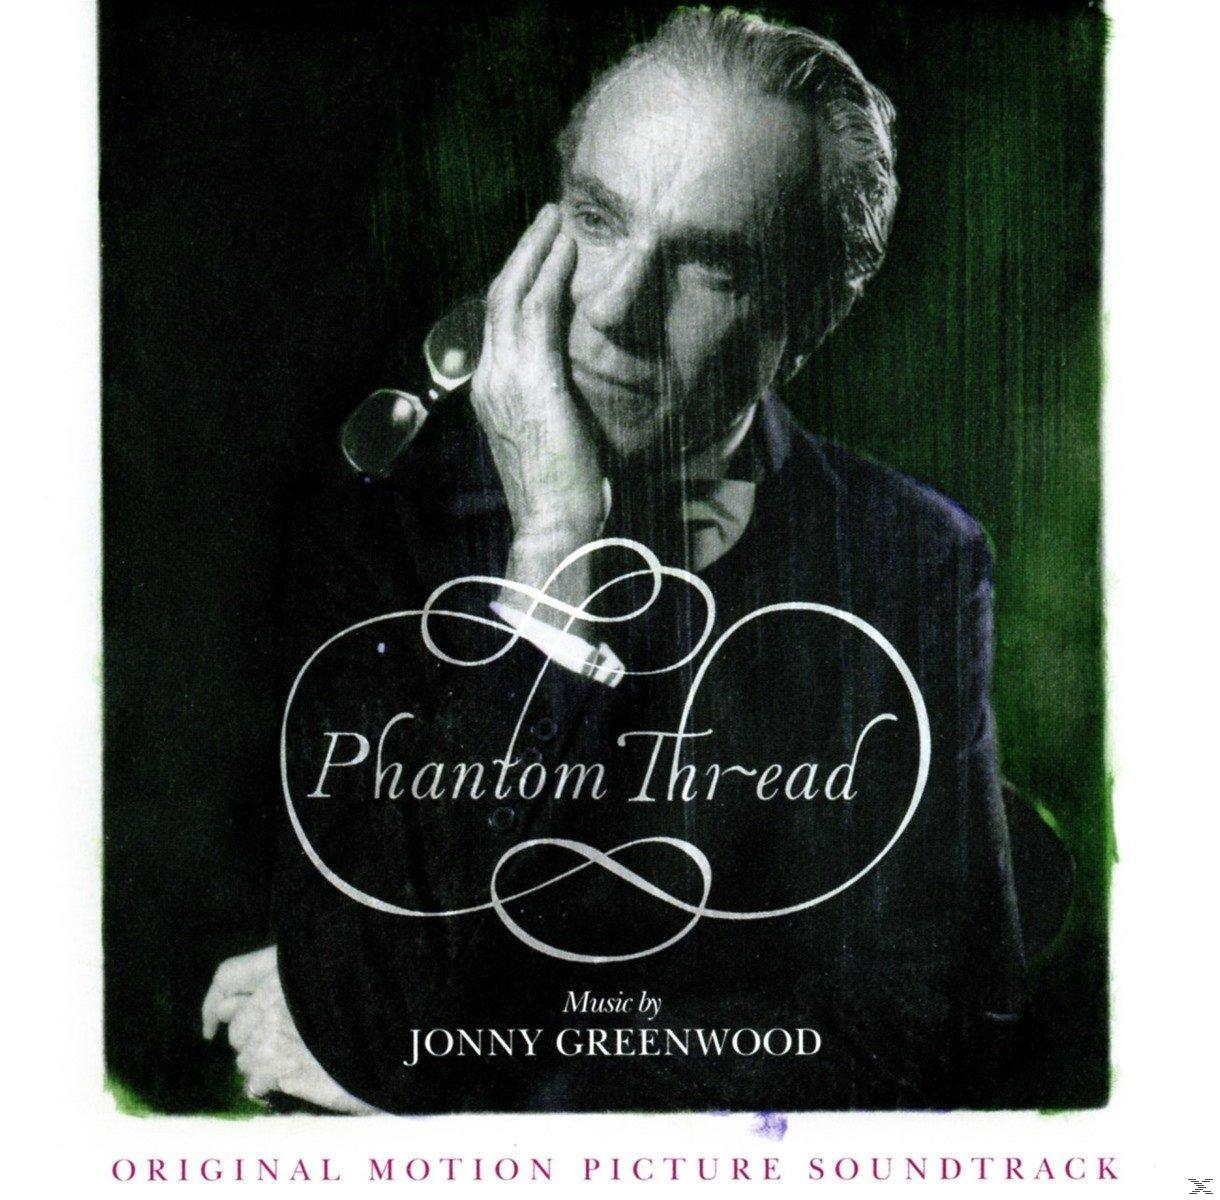 Jonny (CD) Greenwood - - Phantom Thread